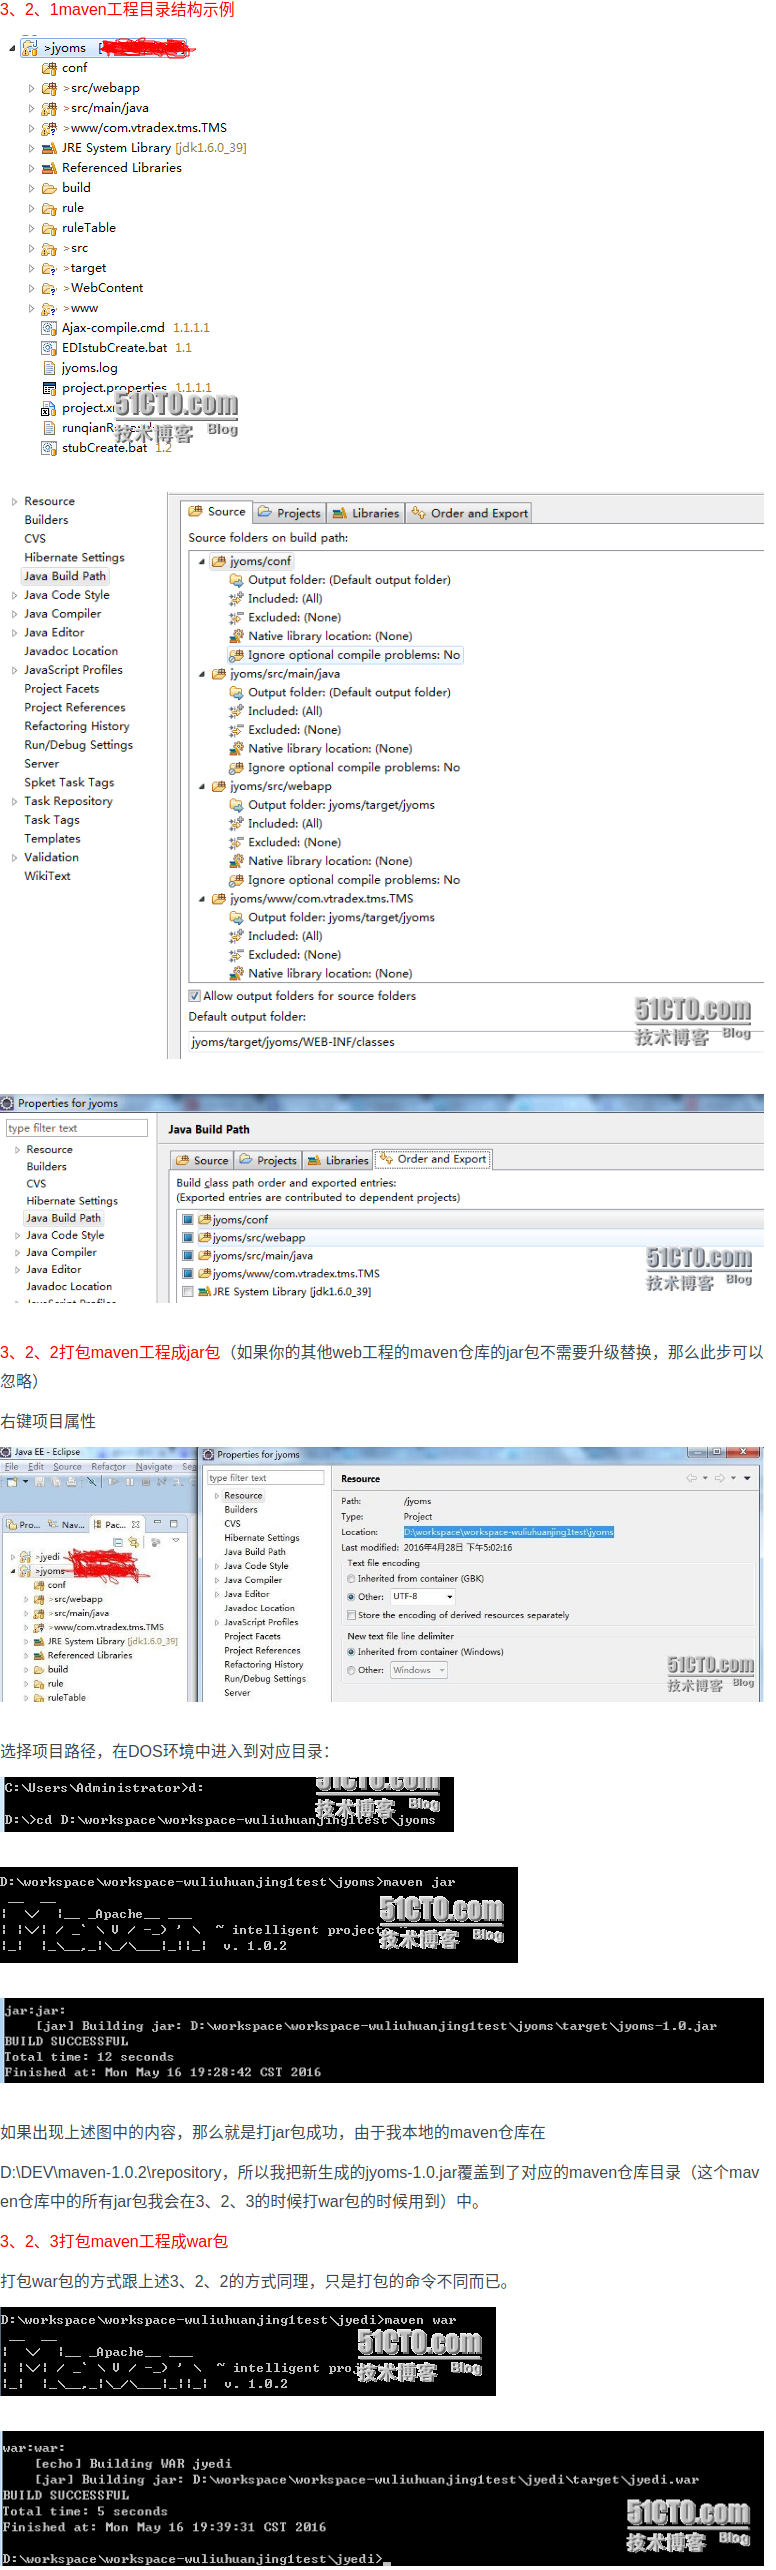 Screenshot20200105java的maven工程部署到linux包括tomcat部署jdk安装maven工程打包及项目运行你可以选择不平凡51CTO博客2.png